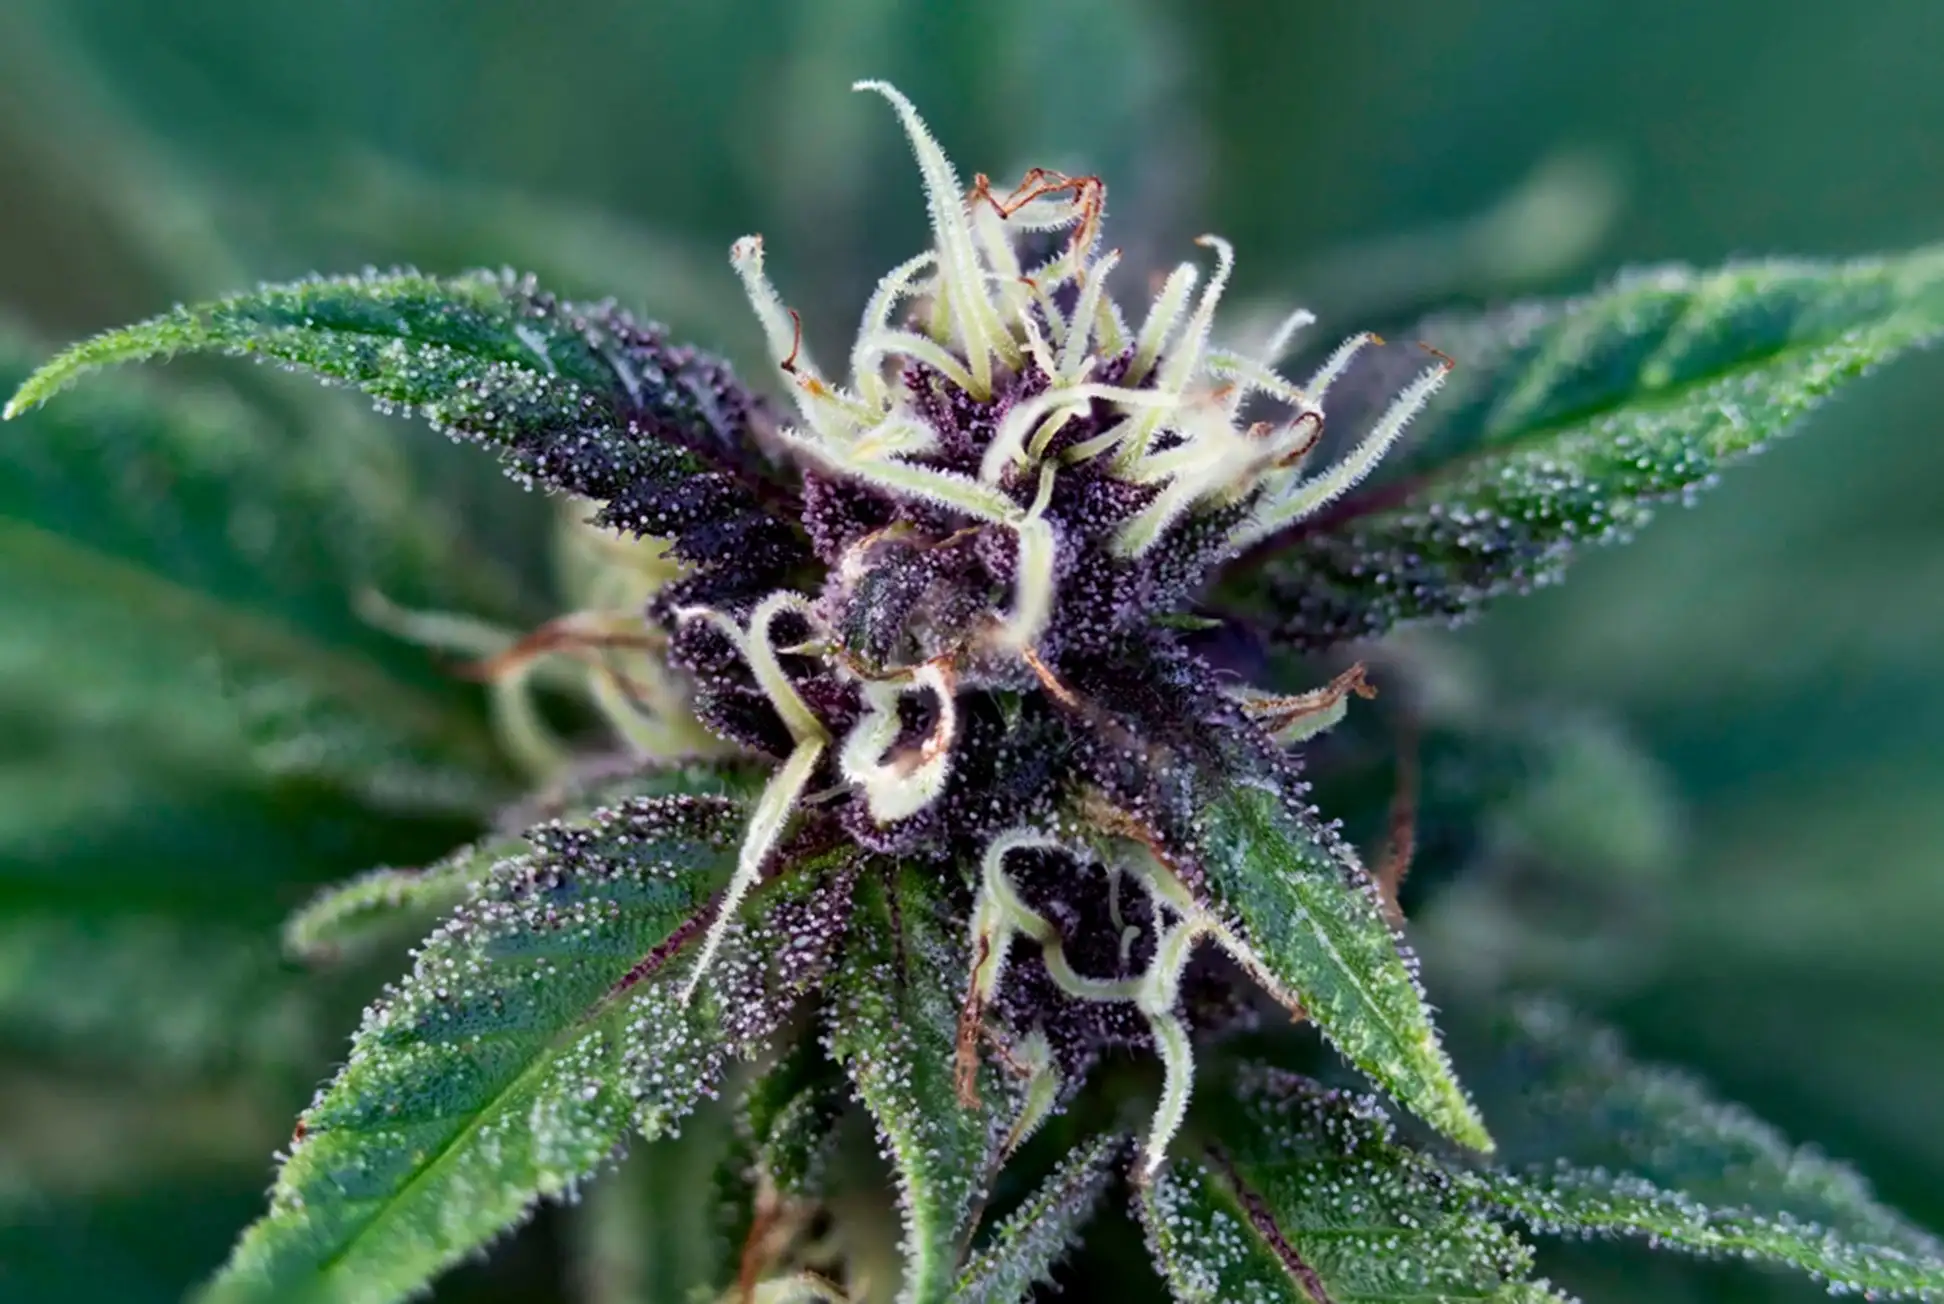 A close up of a purple cannabis plant